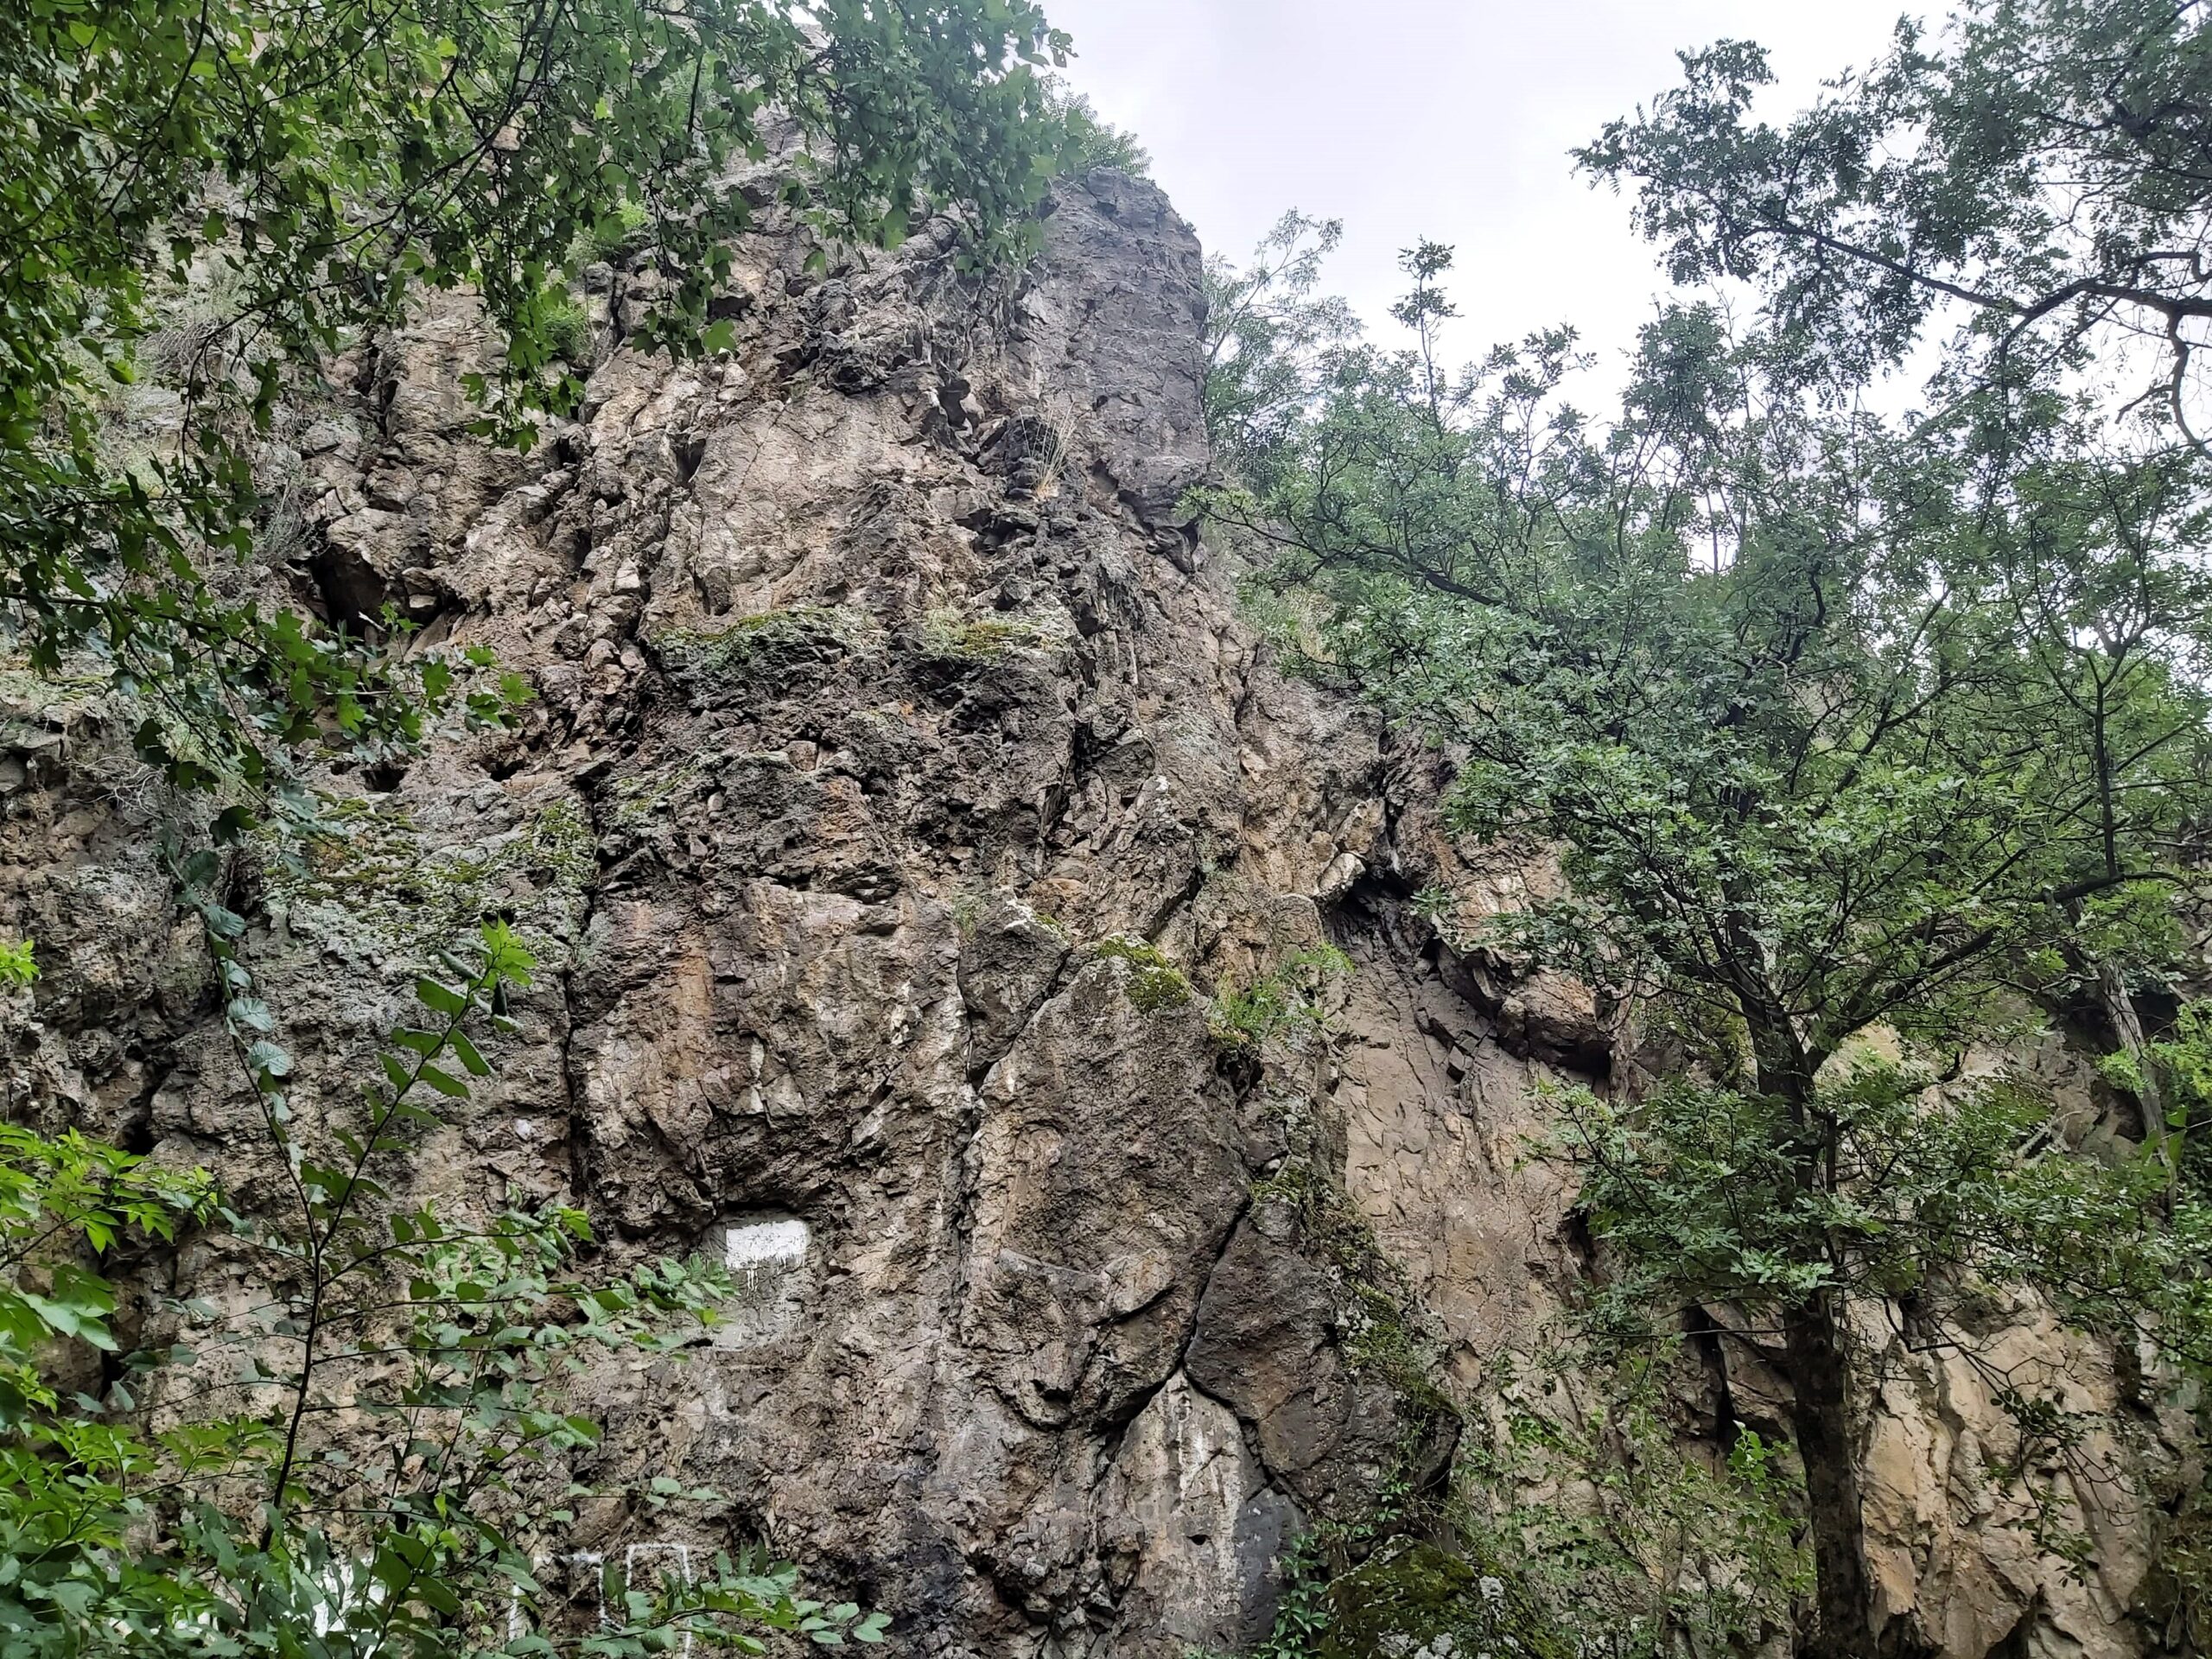 A rugged cliff face with foliage in Deva, Romania